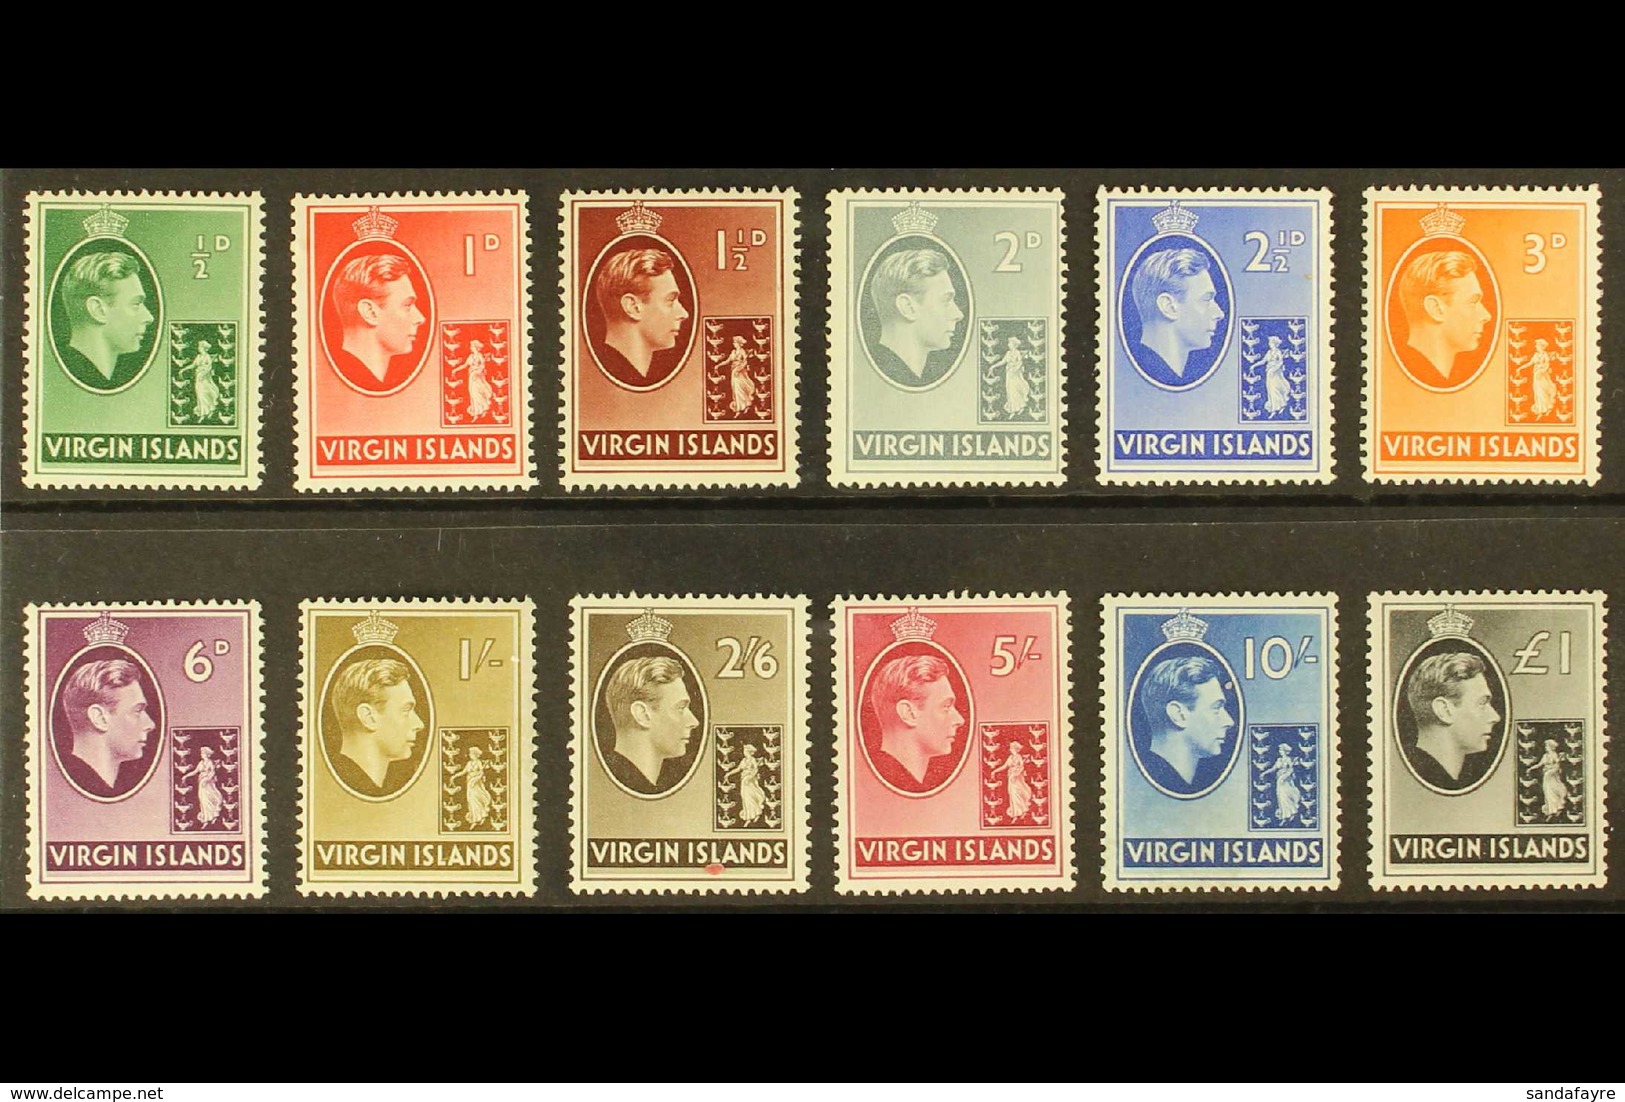 1938-47 KGVI Chalky Paper Complete Set, SG 110/21, Superb Mint, Very Fresh. (12 Stamps) For More Images, Please Visit Ht - Iles Vièrges Britanniques